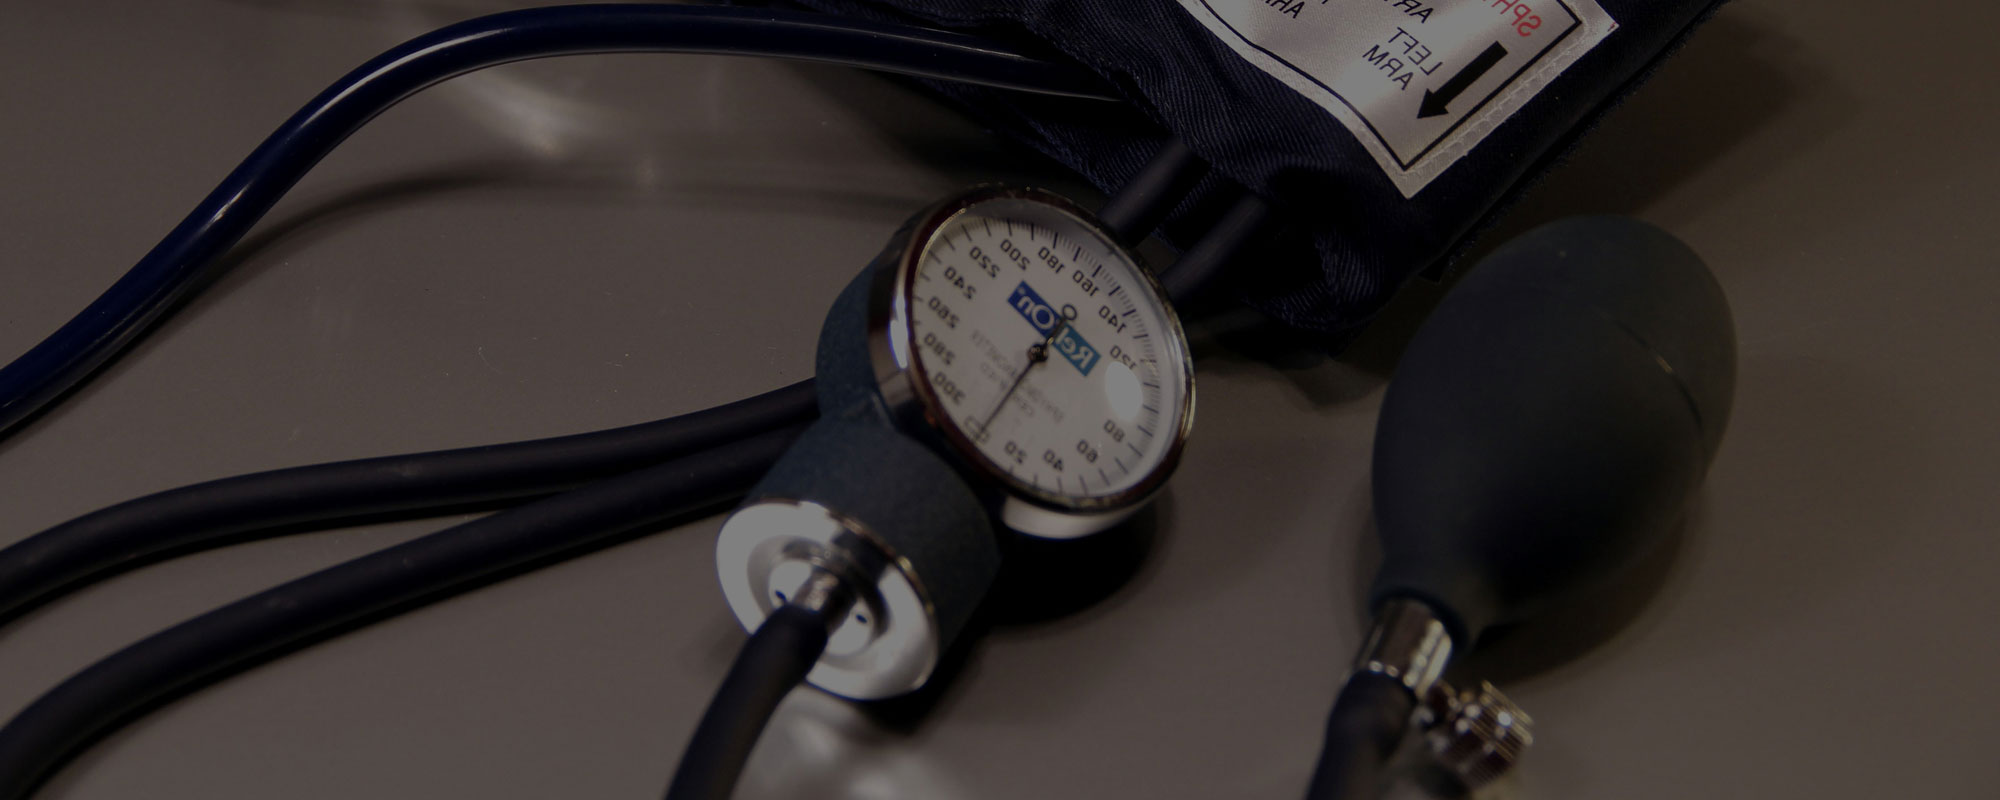 doctors blood pressure monitor